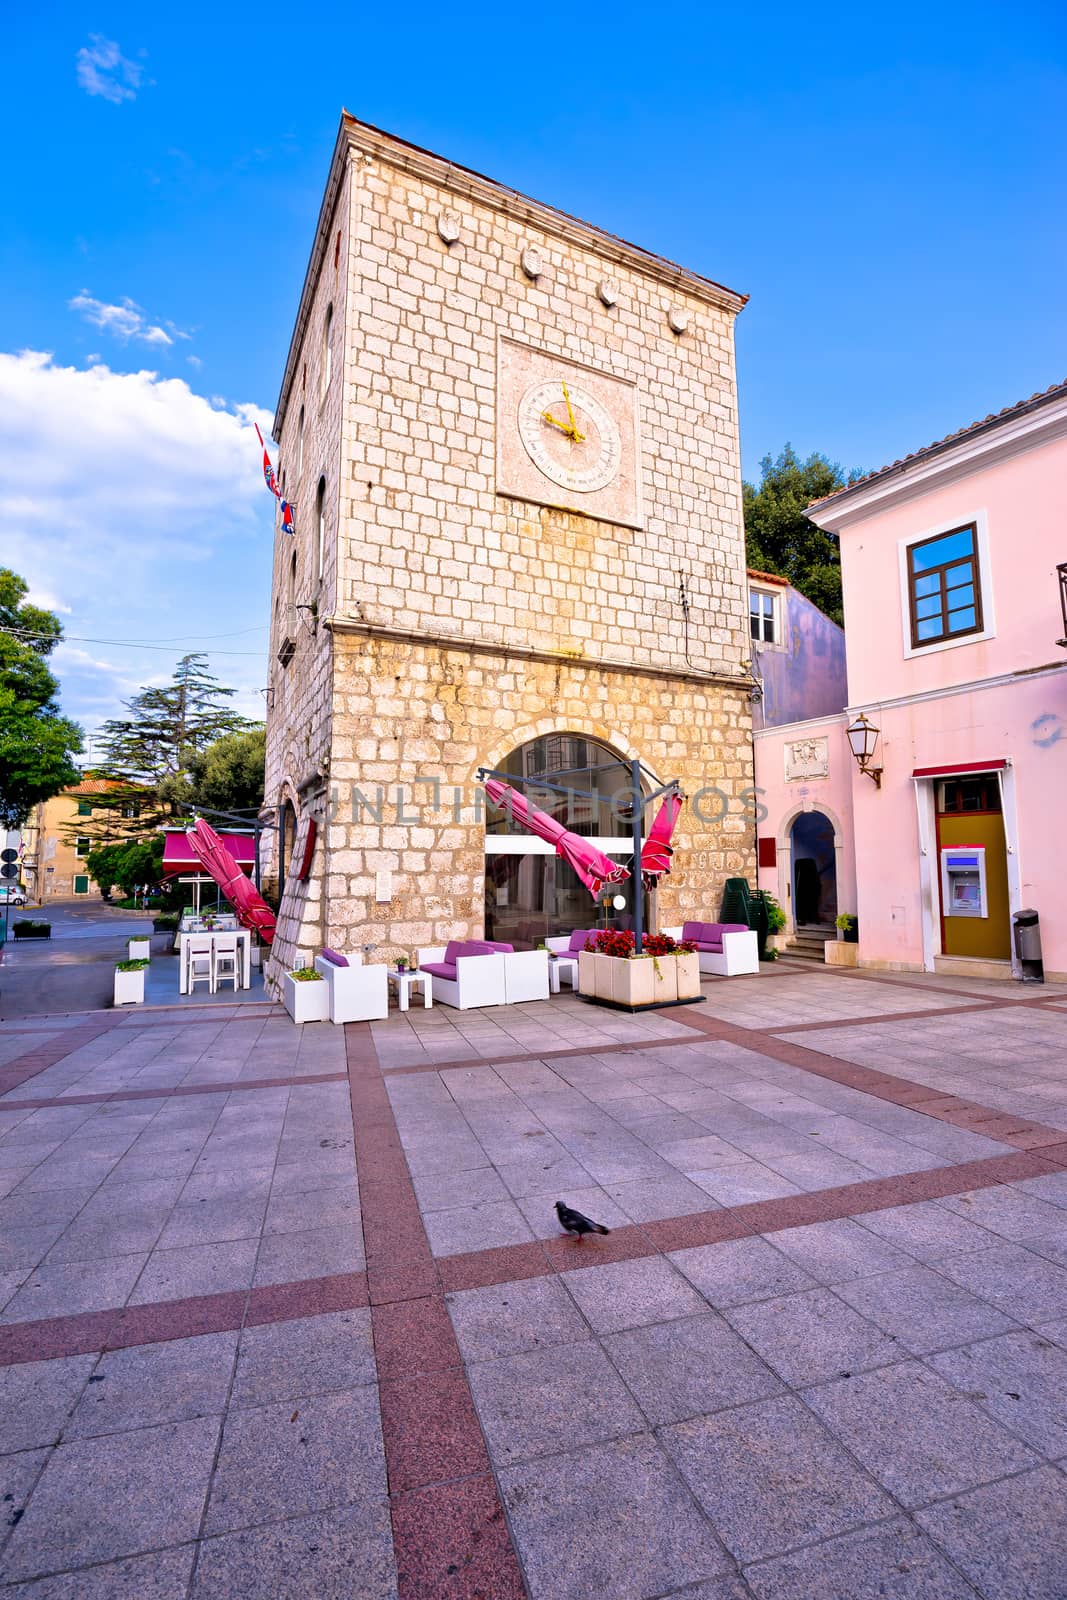 Town of Krk historic main square clocktower view, Kvarner region of Croatia